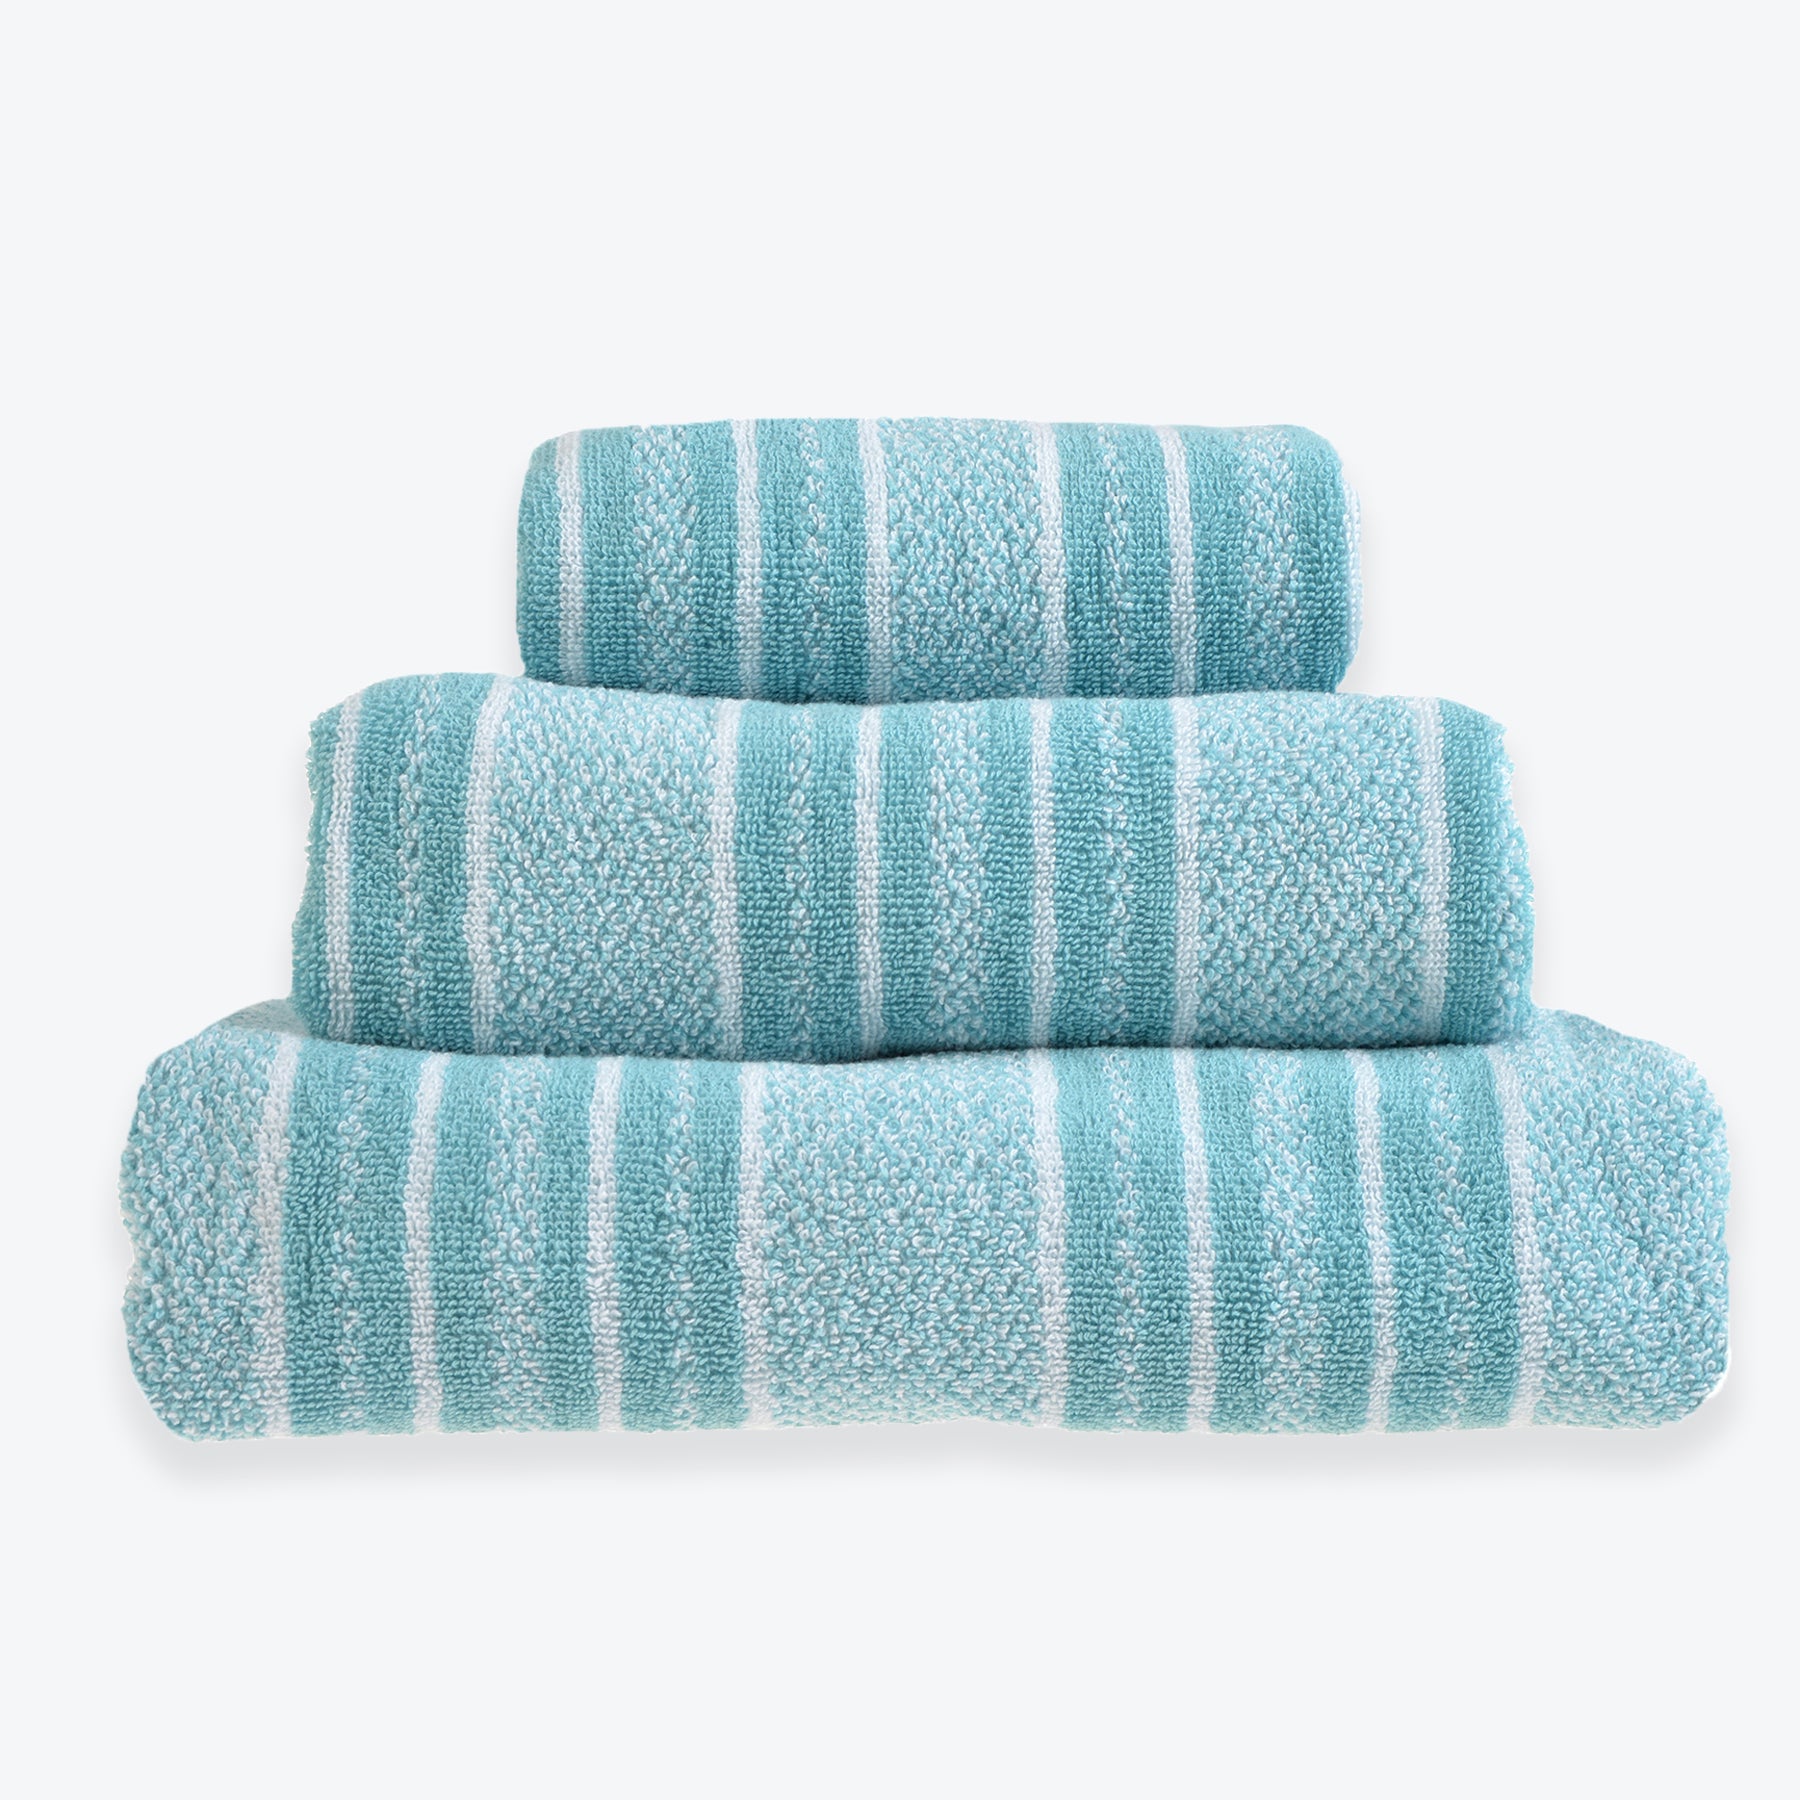 Patterned Bathroom Towels - Duck Egg Blue Striped Towels